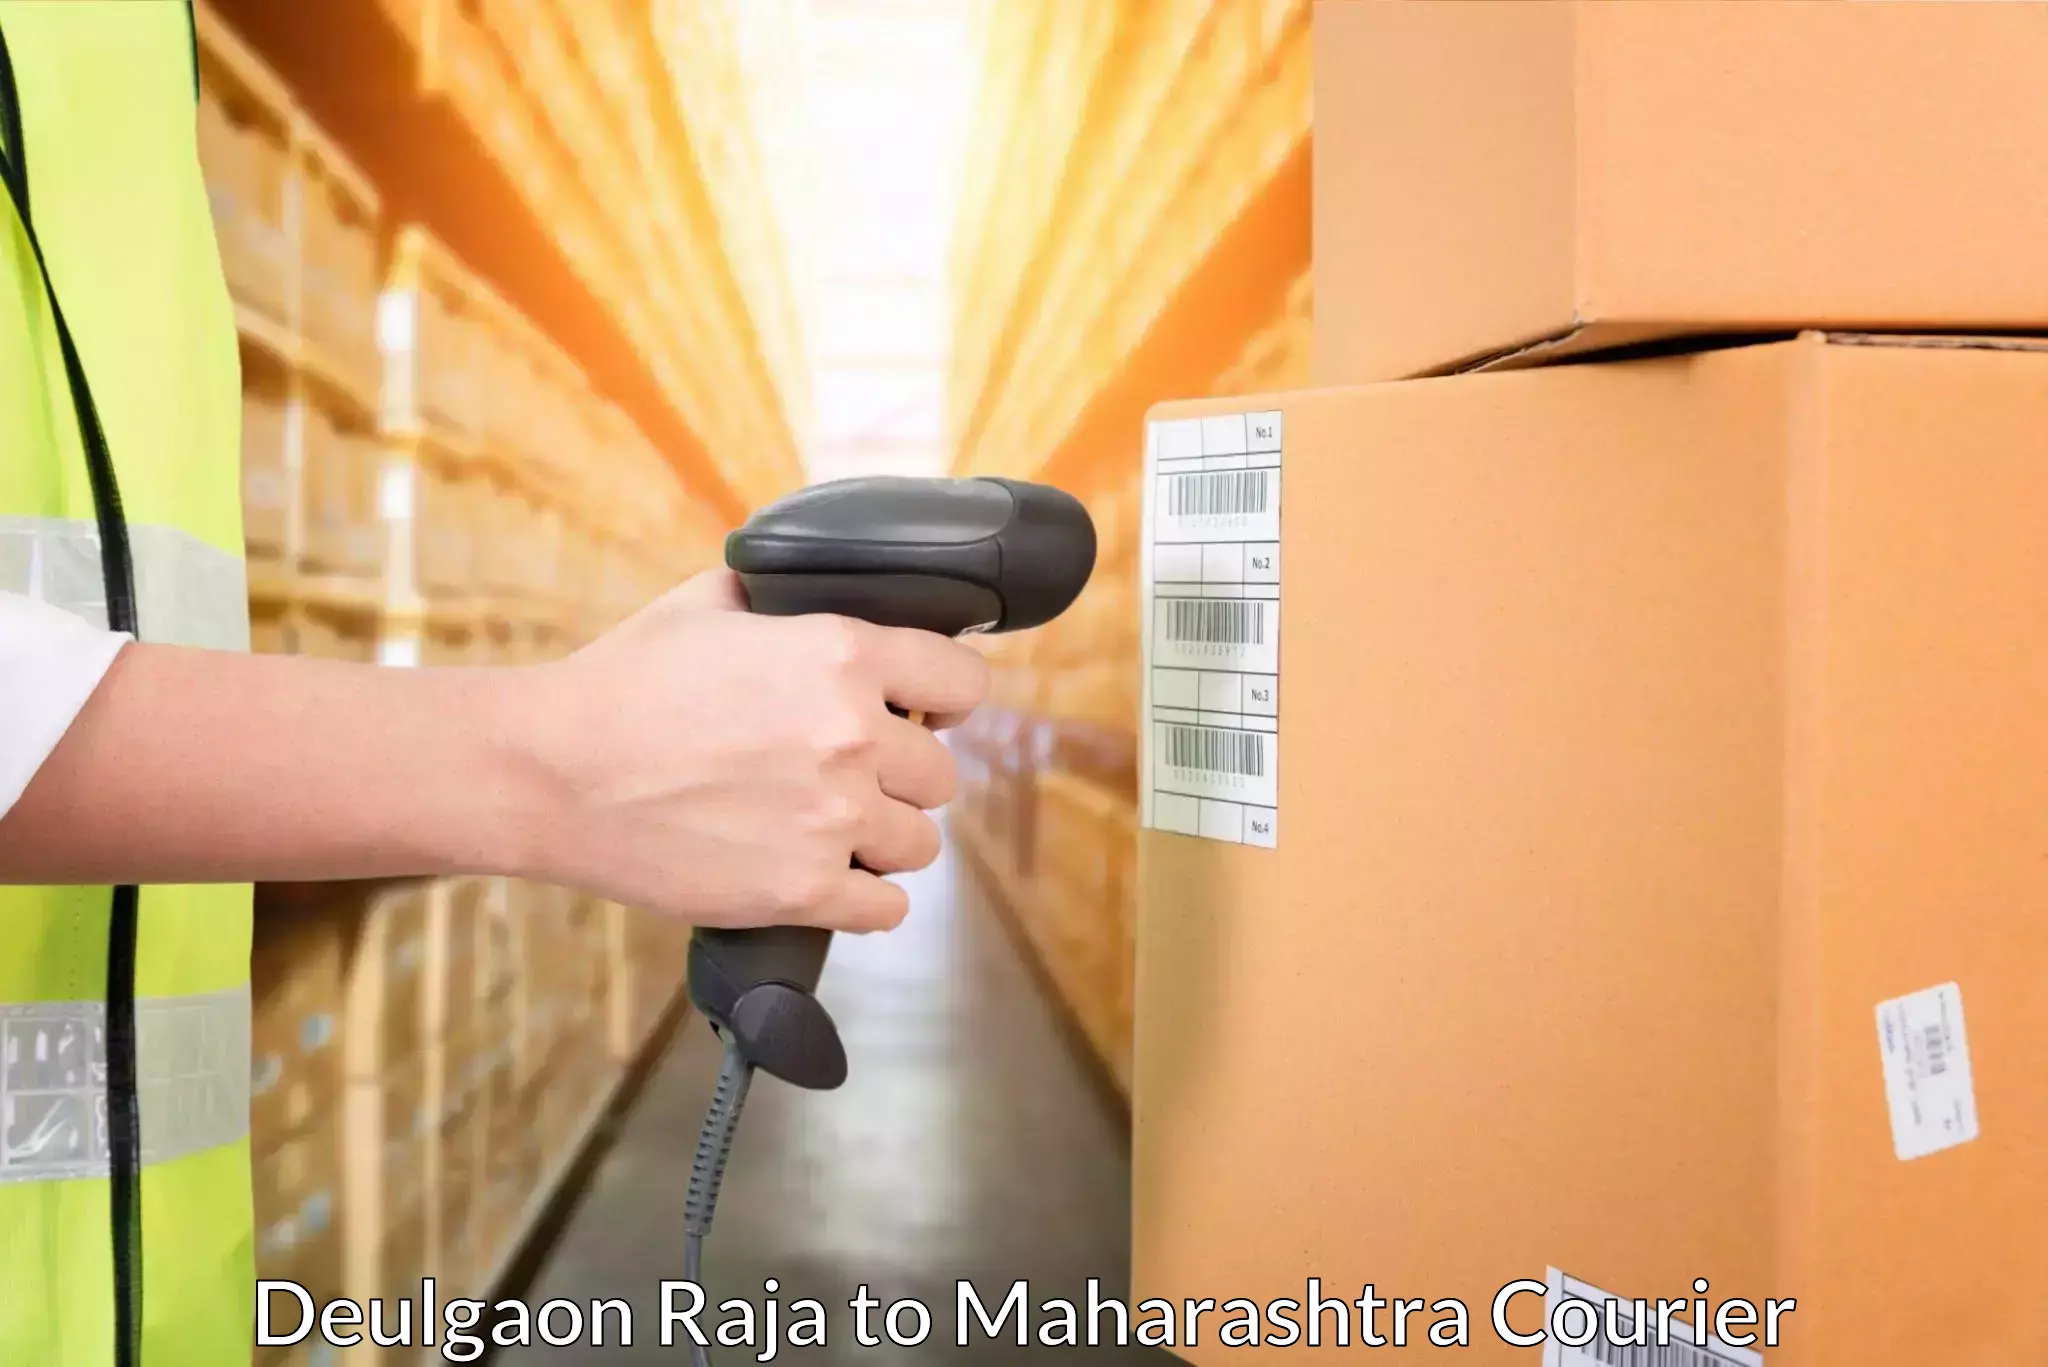 Courier service partnerships Deulgaon Raja to Yeola